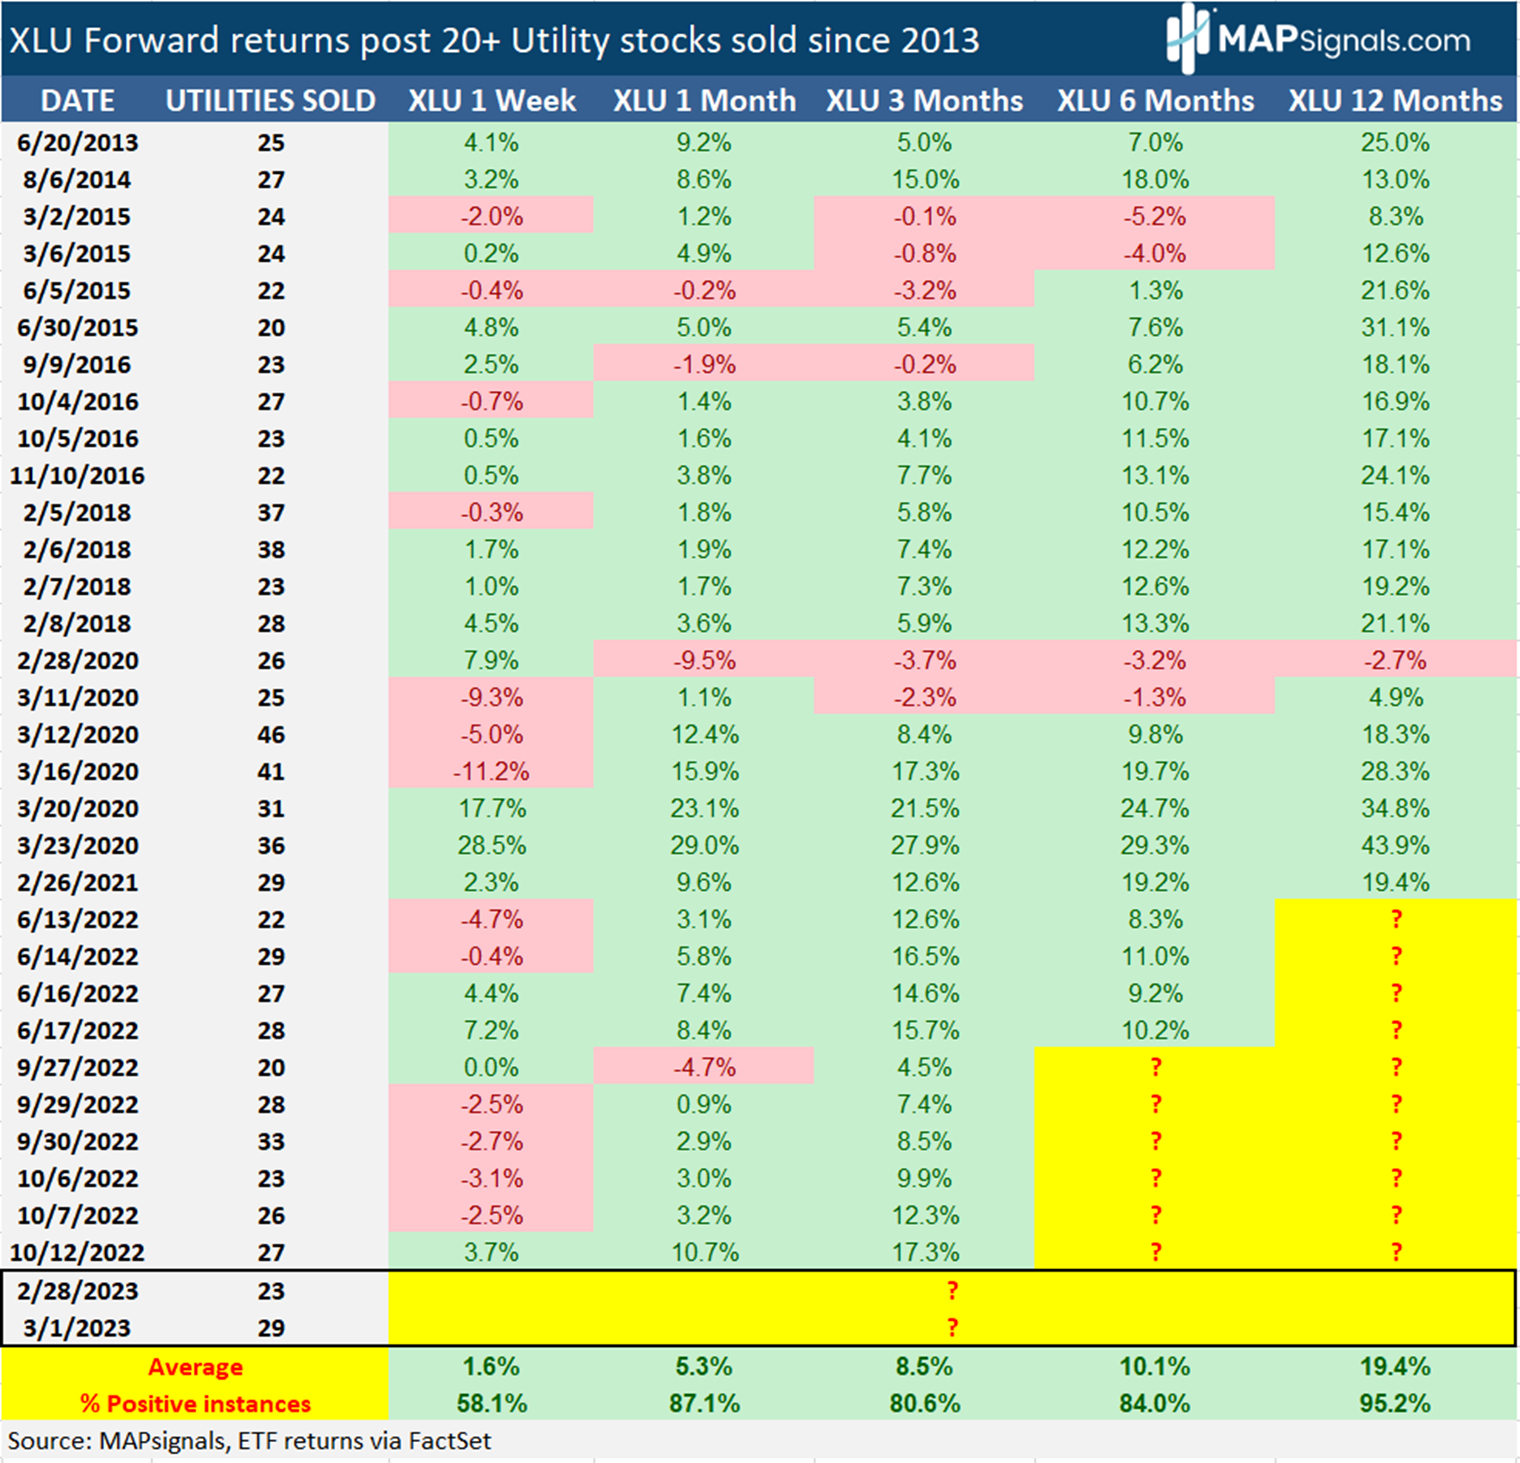 XLU Forward Returns post 20+ Utility Stocks sold since 2013 | MAPsignals